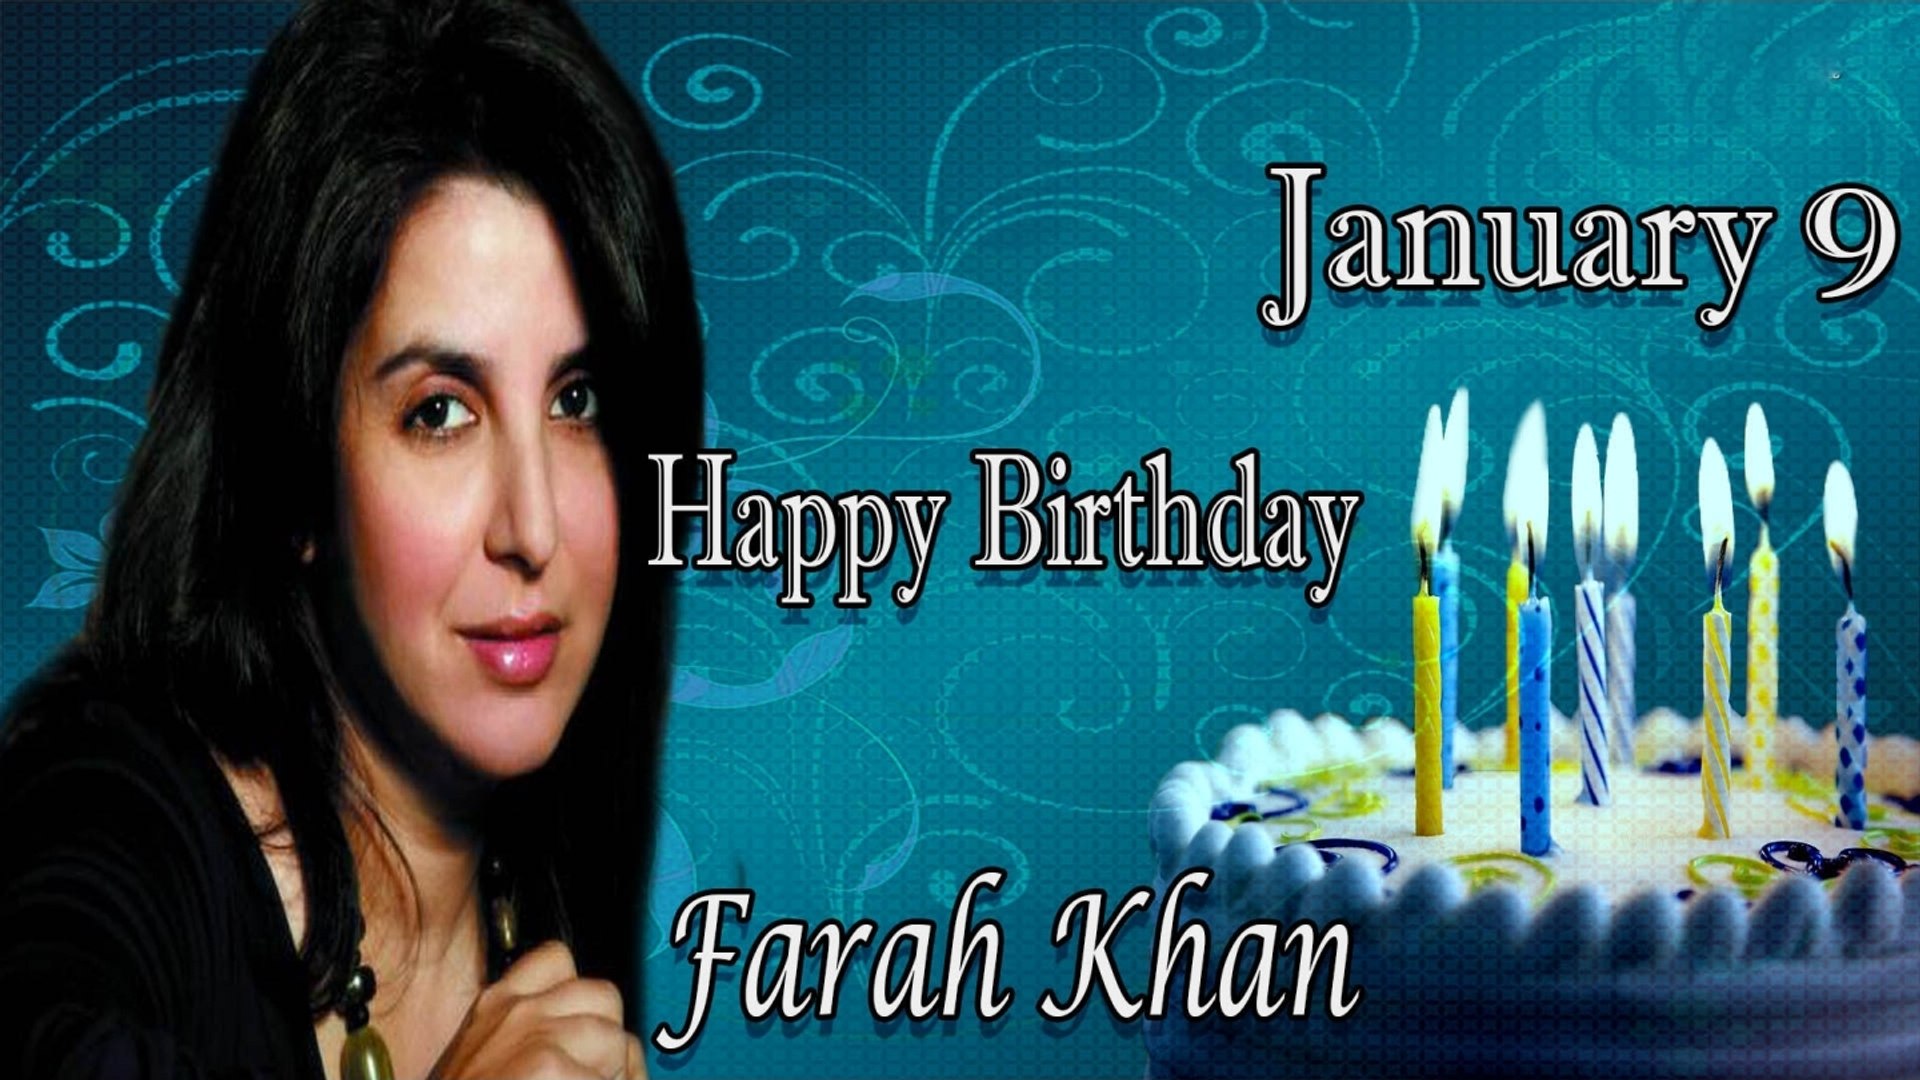 9th January Farah Khan Birthday Chart - video Dailymotion